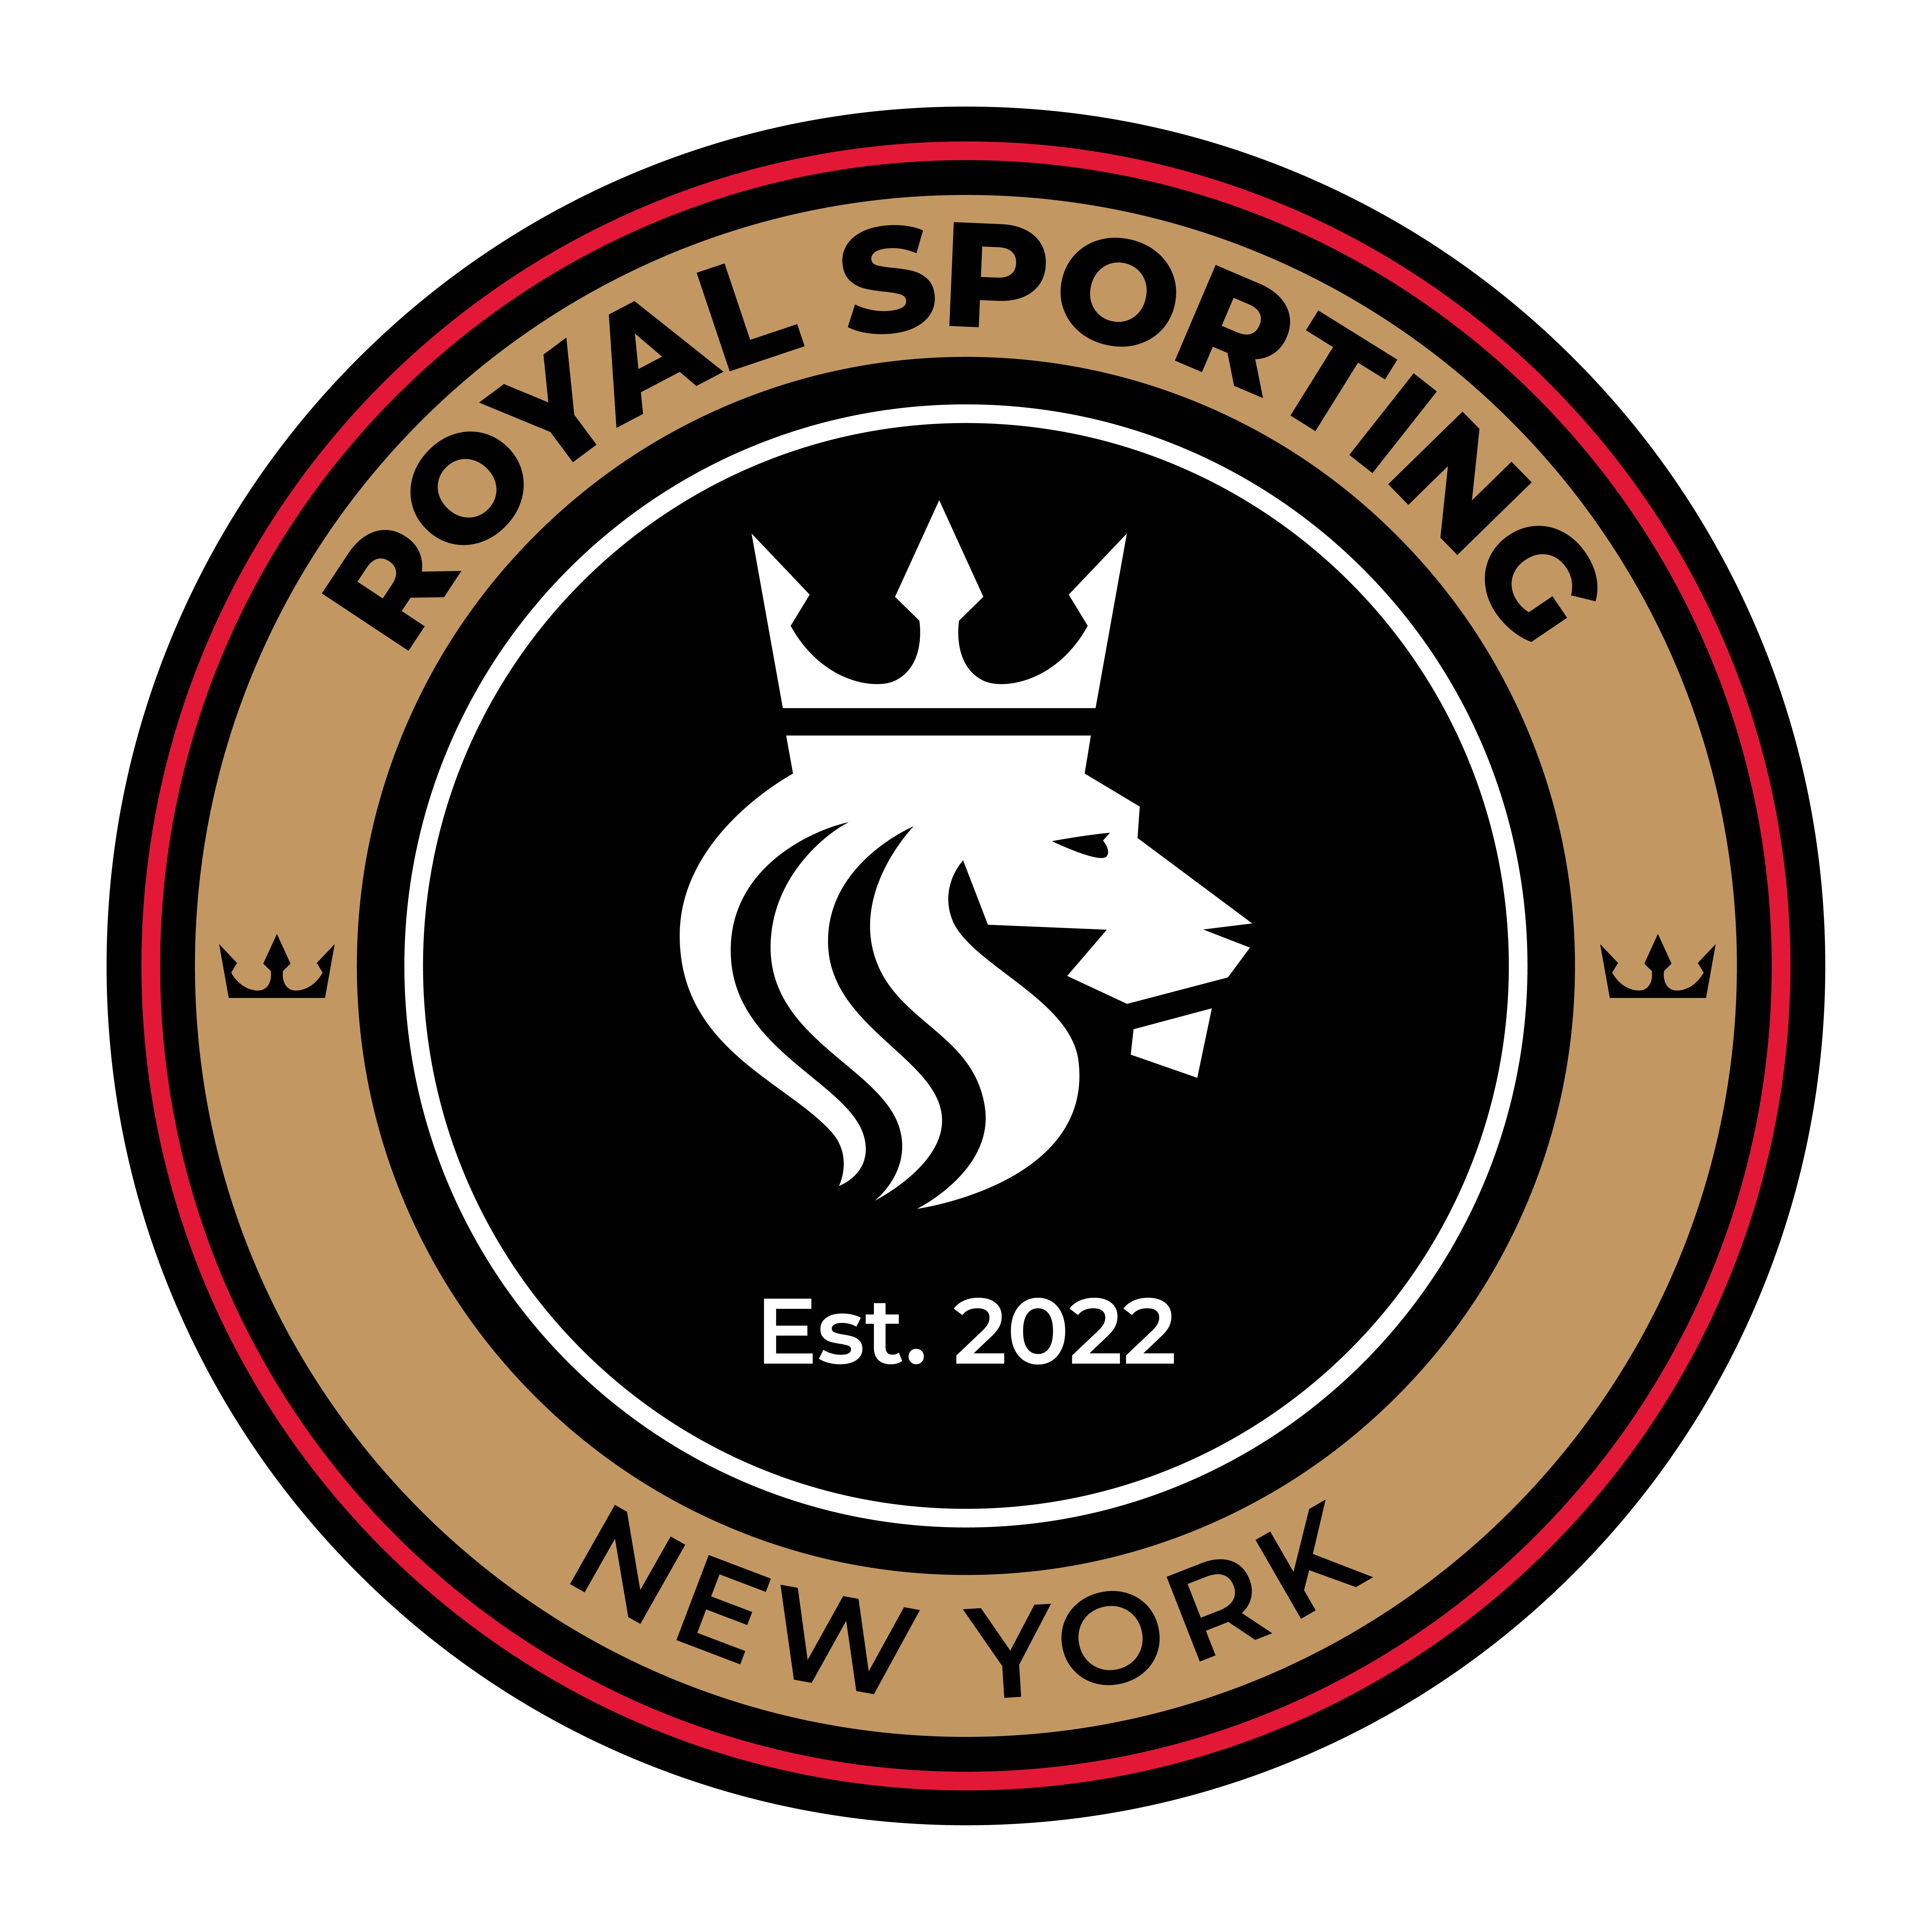 Royal Sporting New York